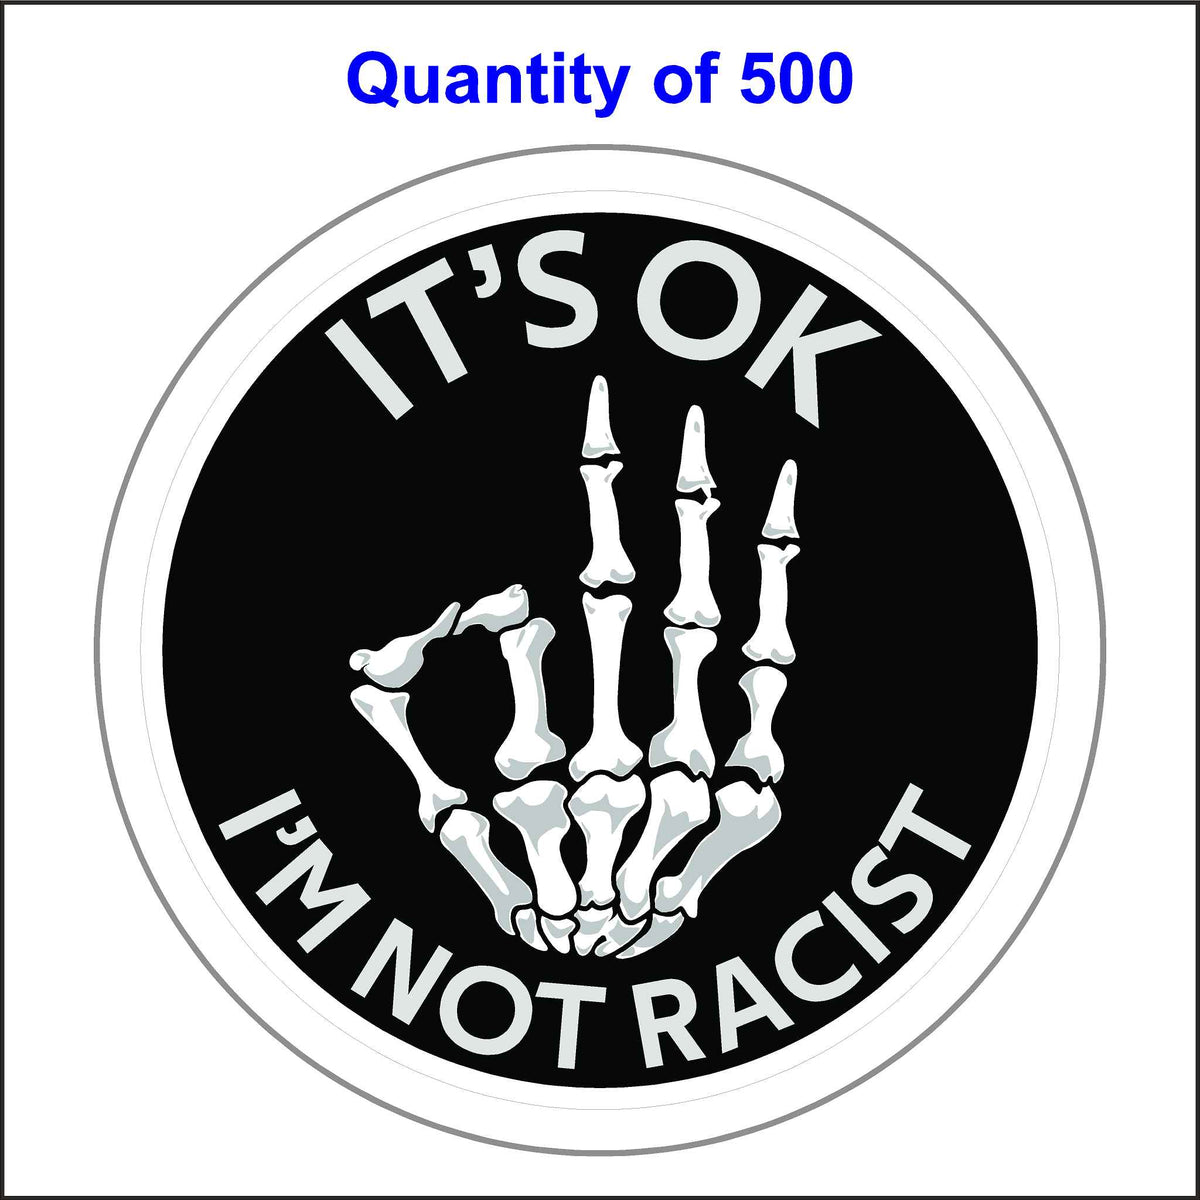 Comedic Skeleton Hand, It’s Okay I’m Not Racist Sticker With the Okay Symbol. 500 Quantity.